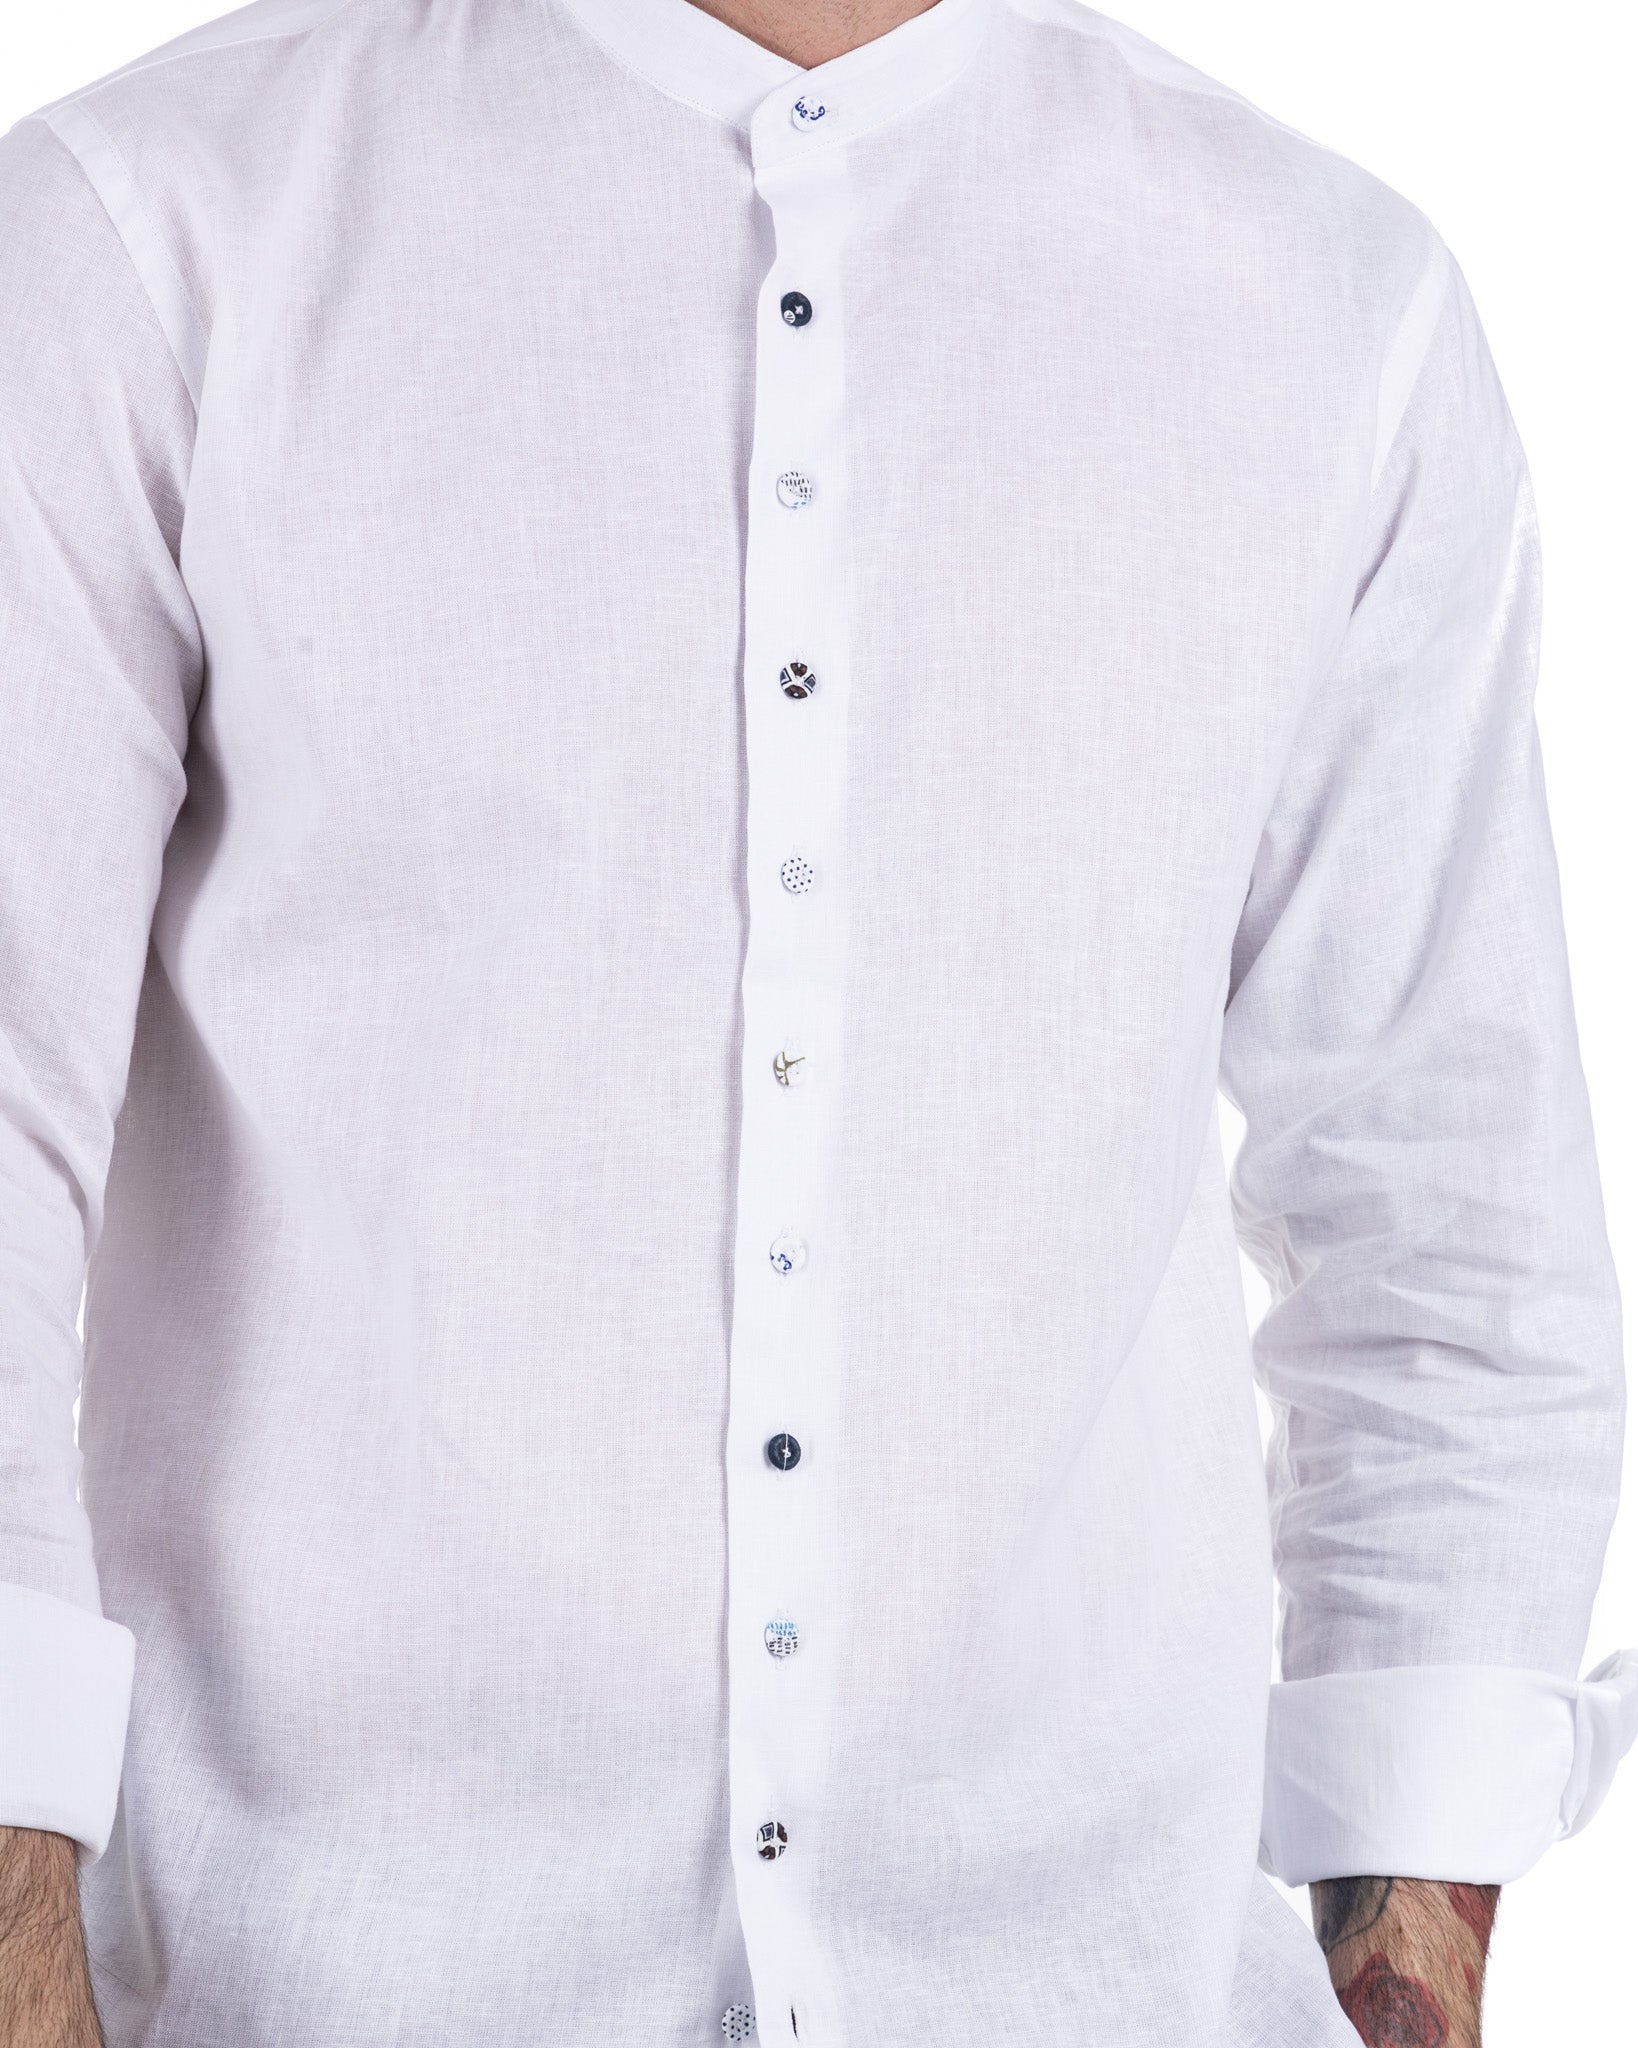 Positano - chemise coréenne en lin blanc